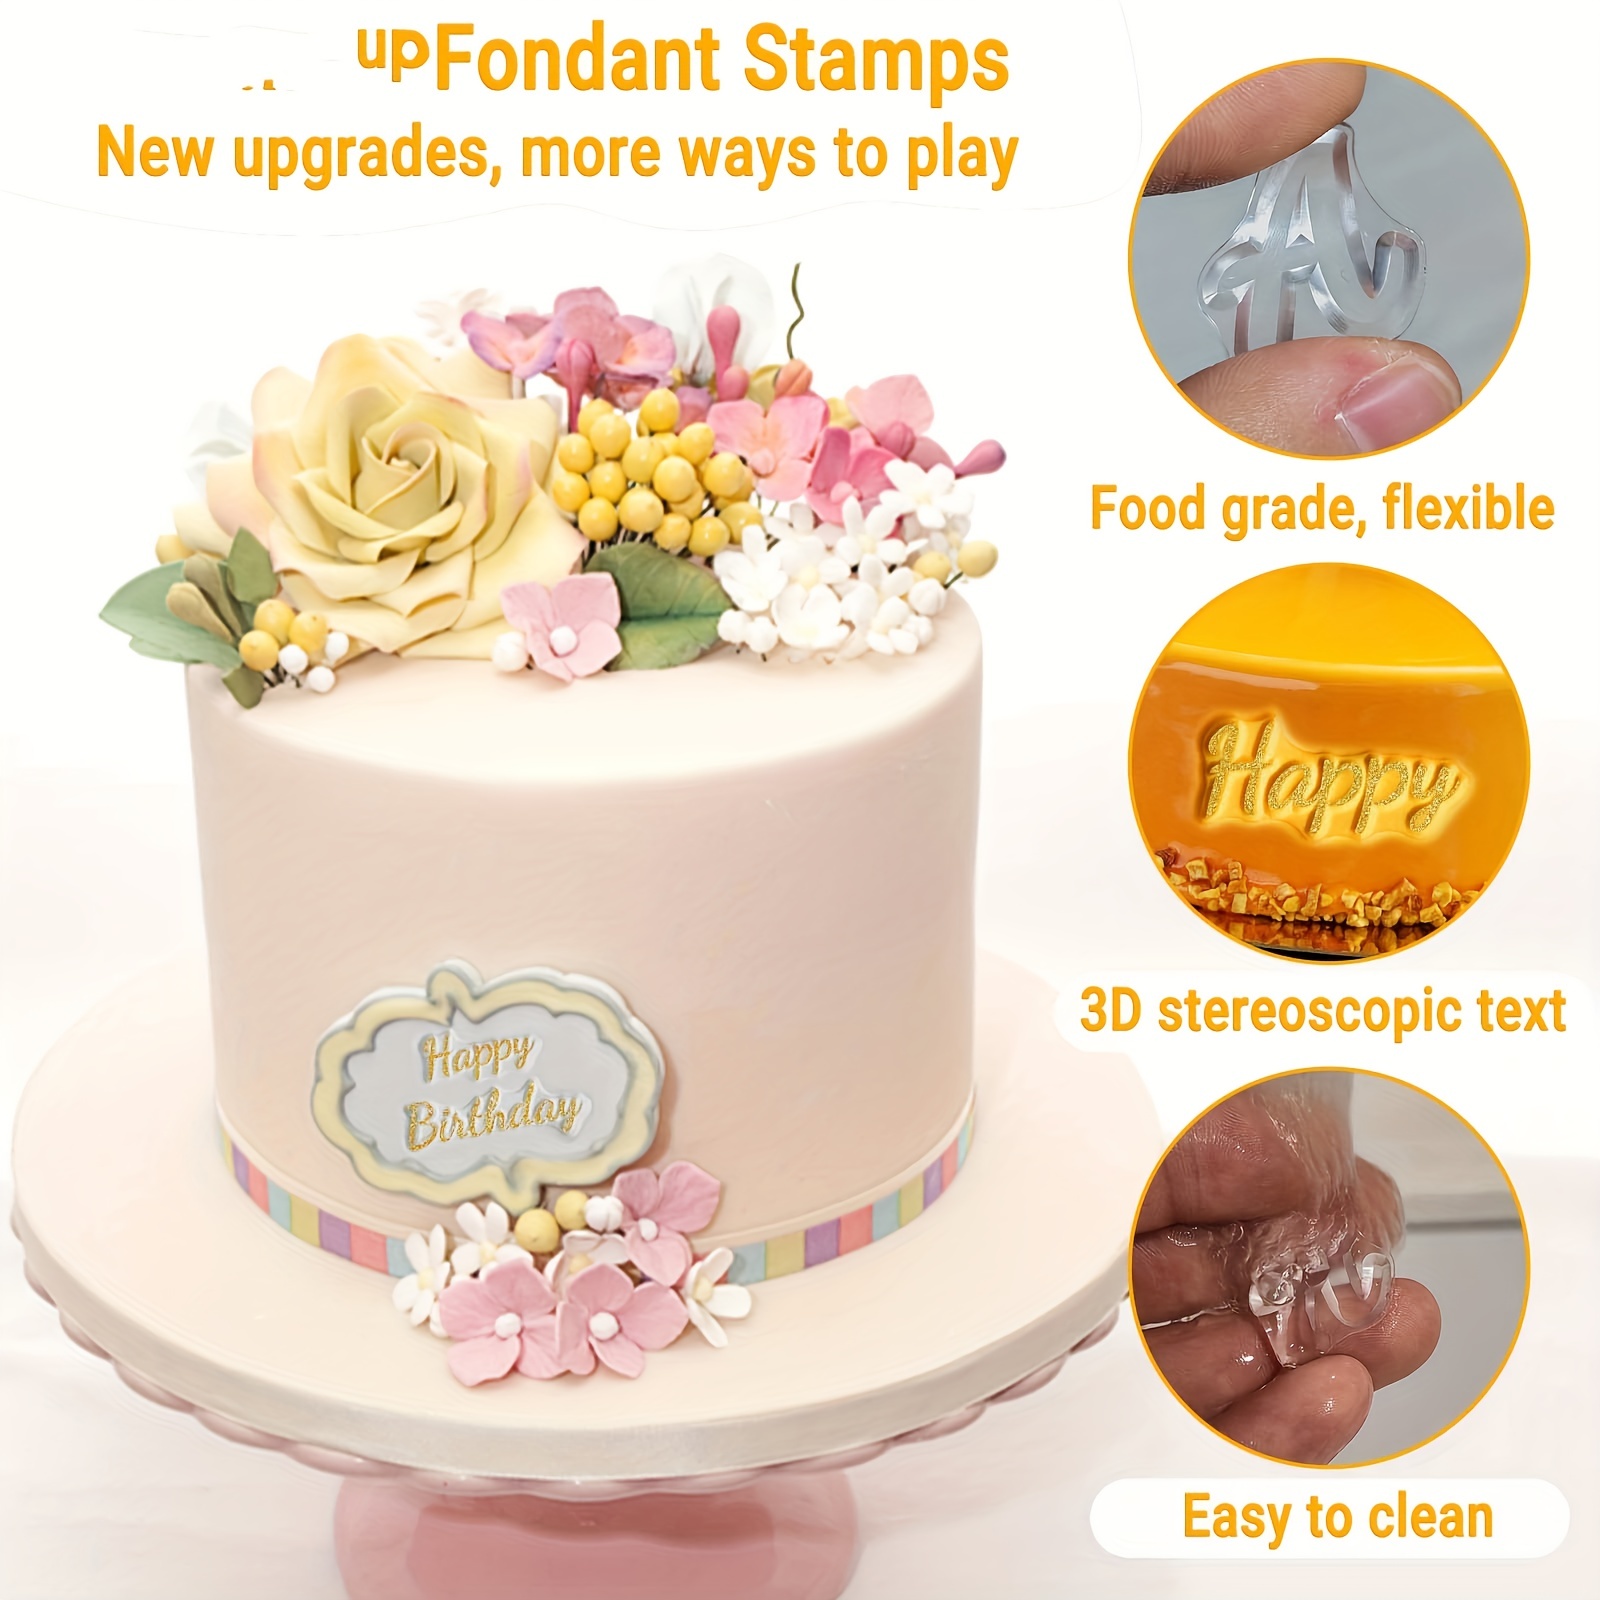 Full set of Plain fondant stamp